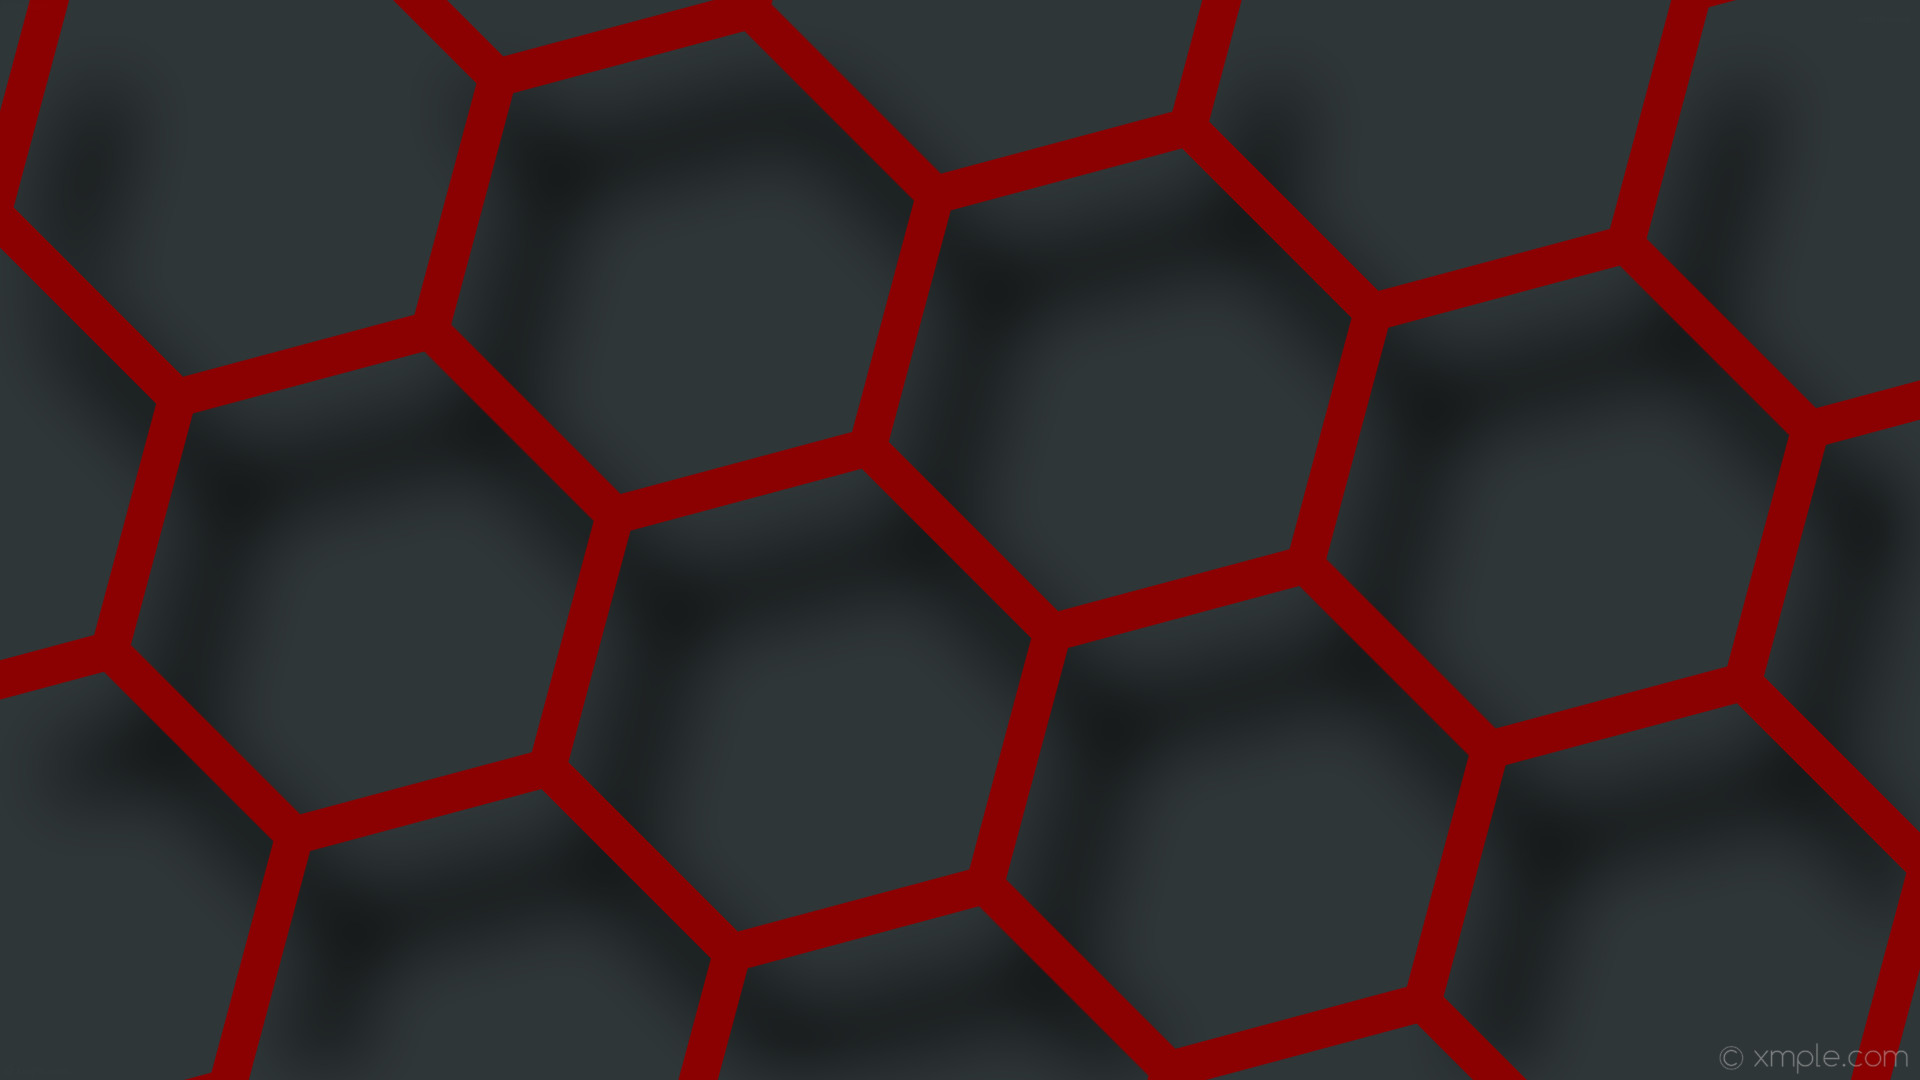 1920x1080 wallpaper beehive red hexagon gray drop shadow dark red #8b0000 #2f3638 45Â°  38px